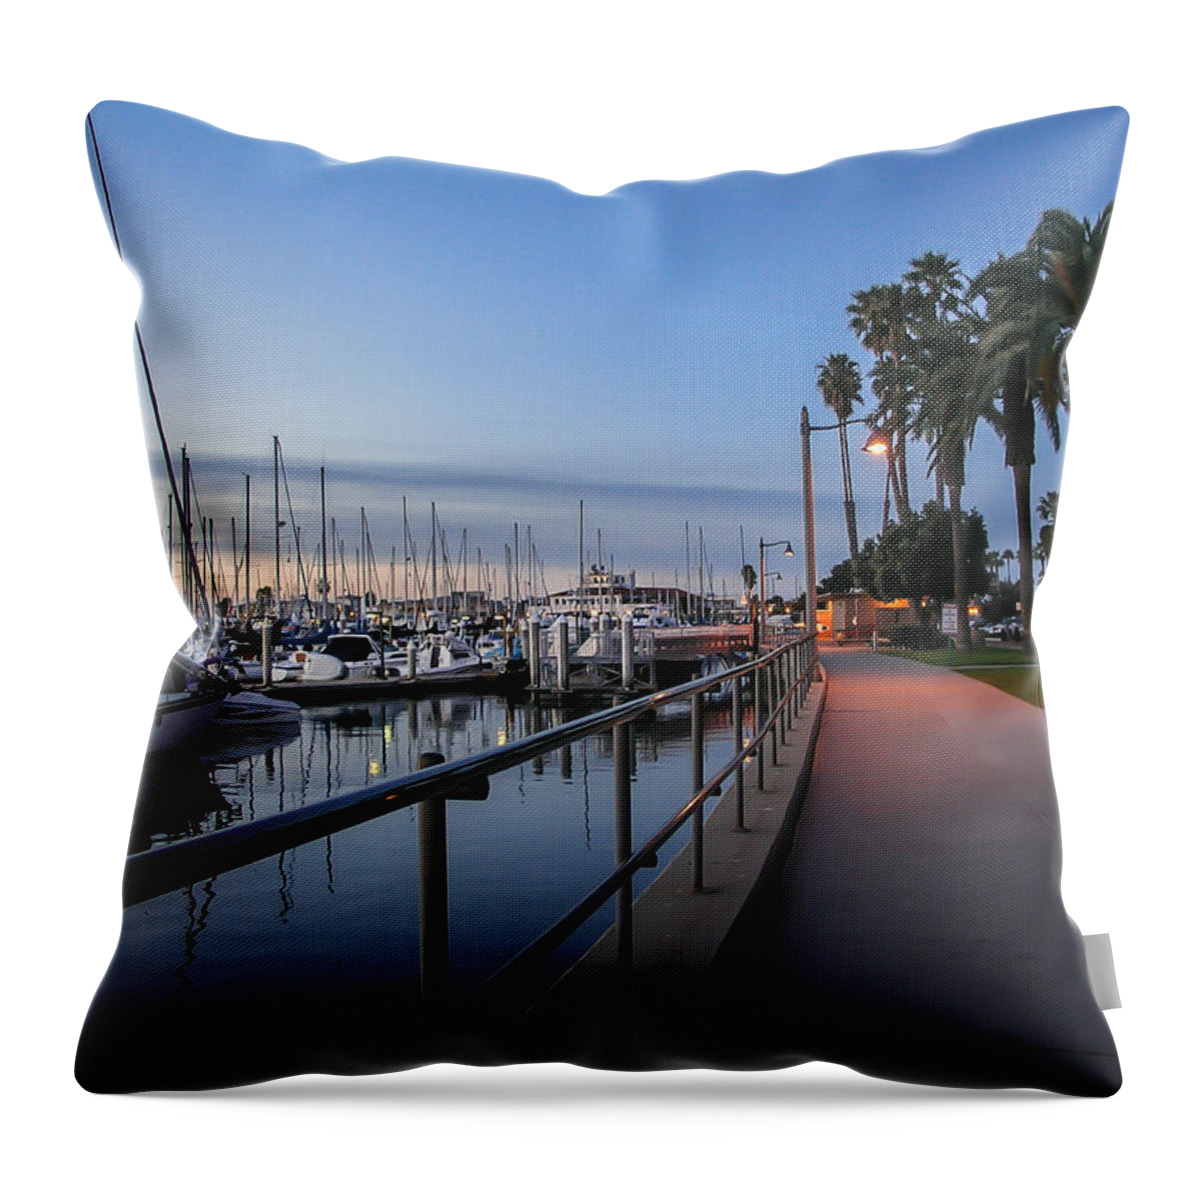 Sunrise Throw Pillow featuring the photograph Sunrise Over Santa Barbara Marina by Tom Mc Nemar